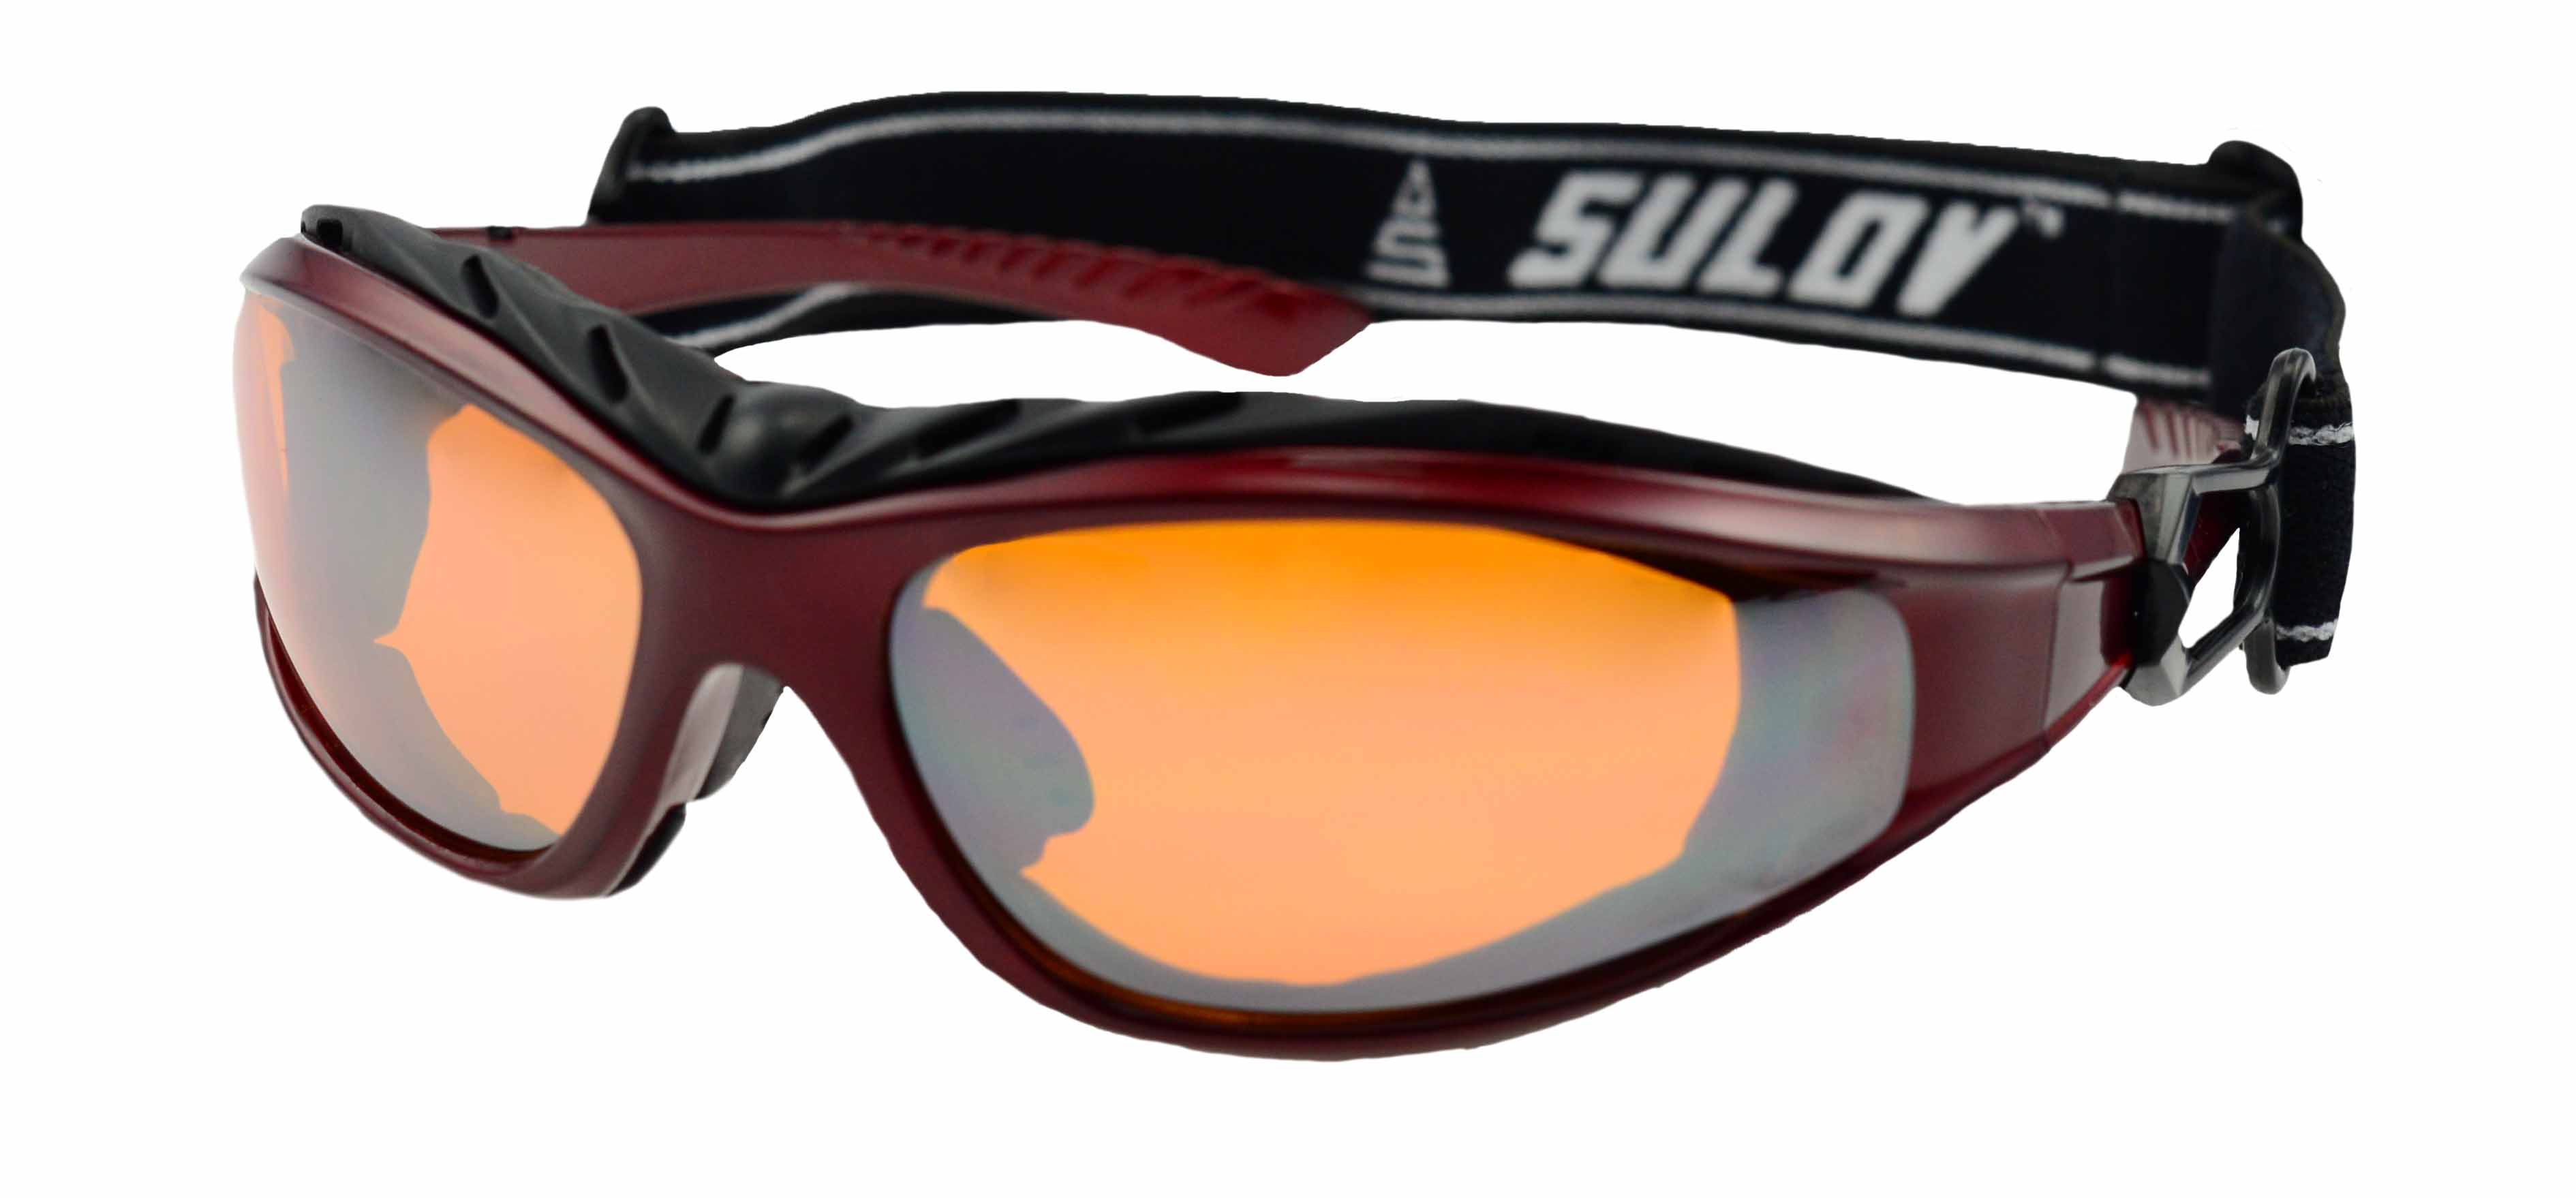 Lyžařské brýle - SULOV ADULT II